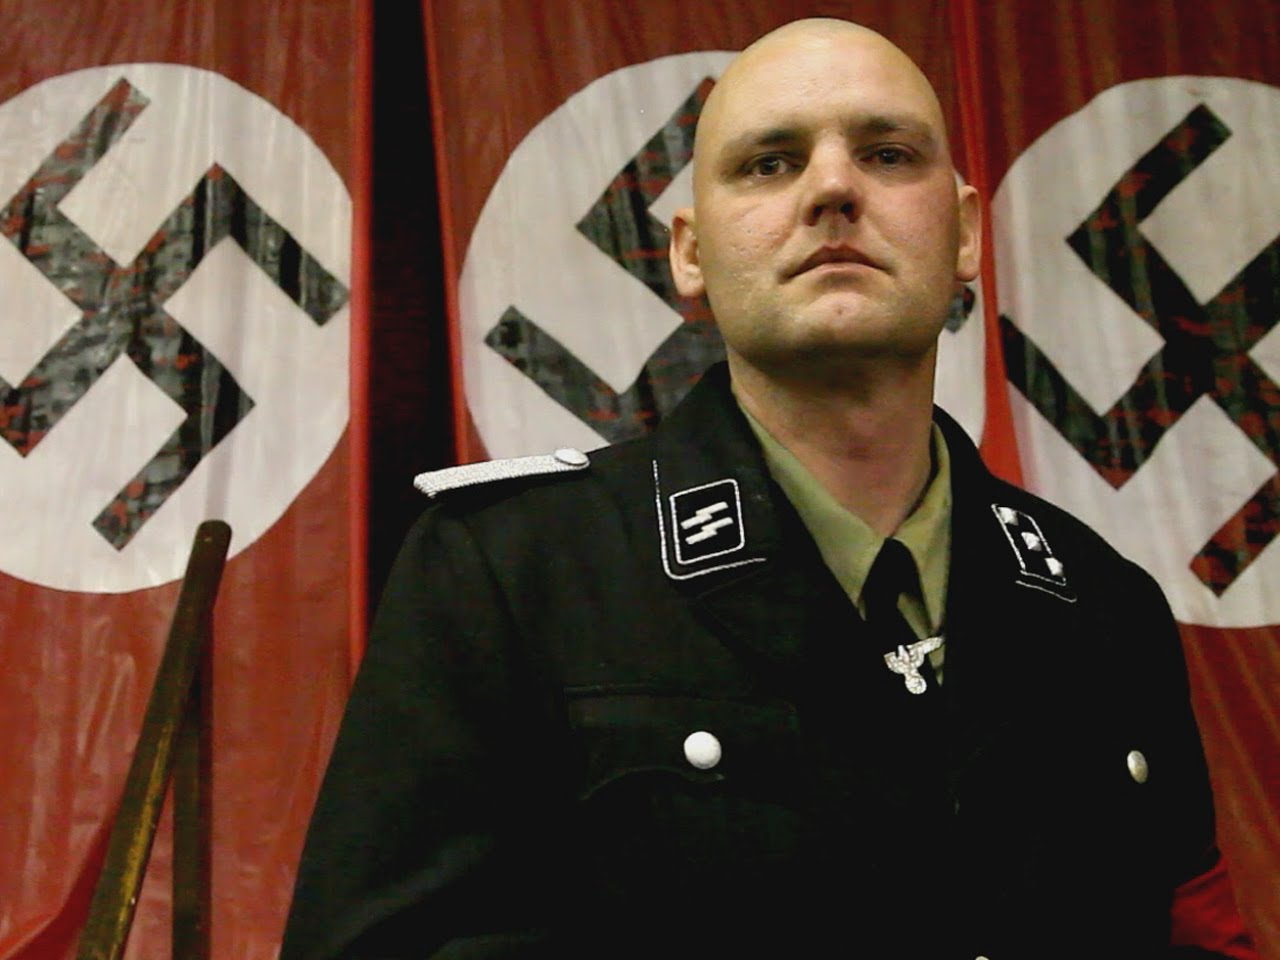 3 национал. Джефф Холл неонацист.